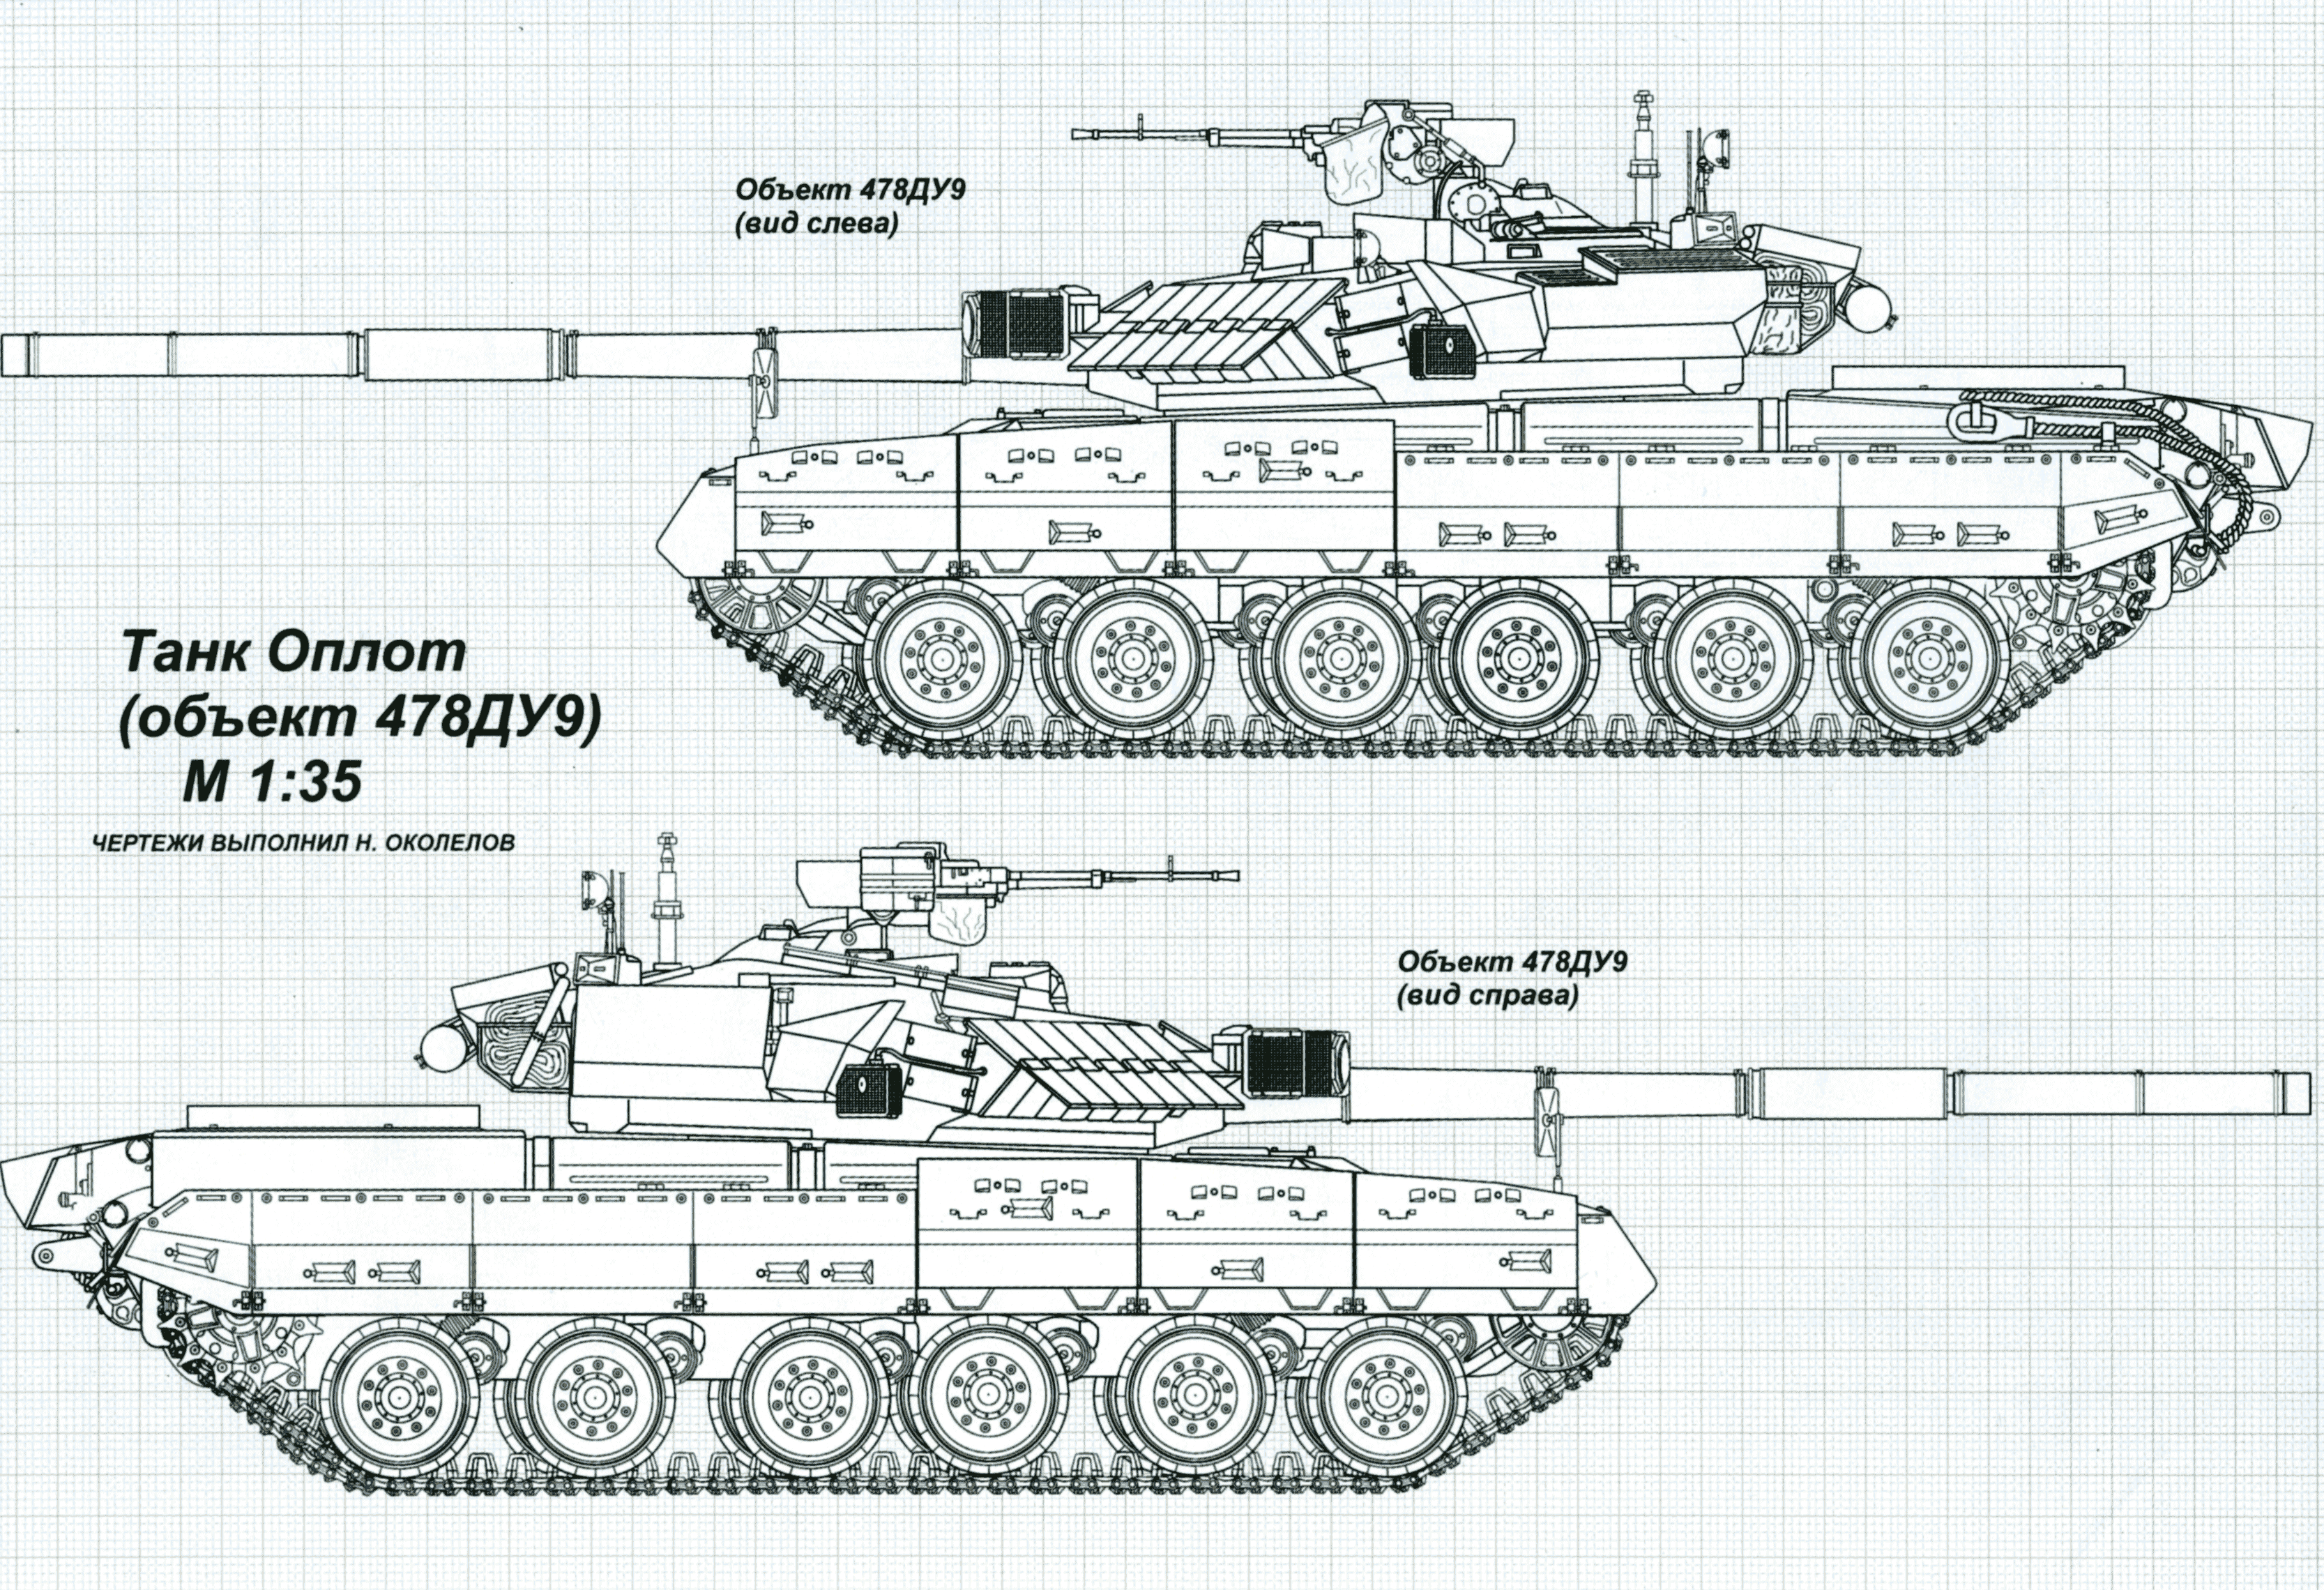 http://armor.kiev.ua/Tanks/Modern/T84/2/t84_1.png